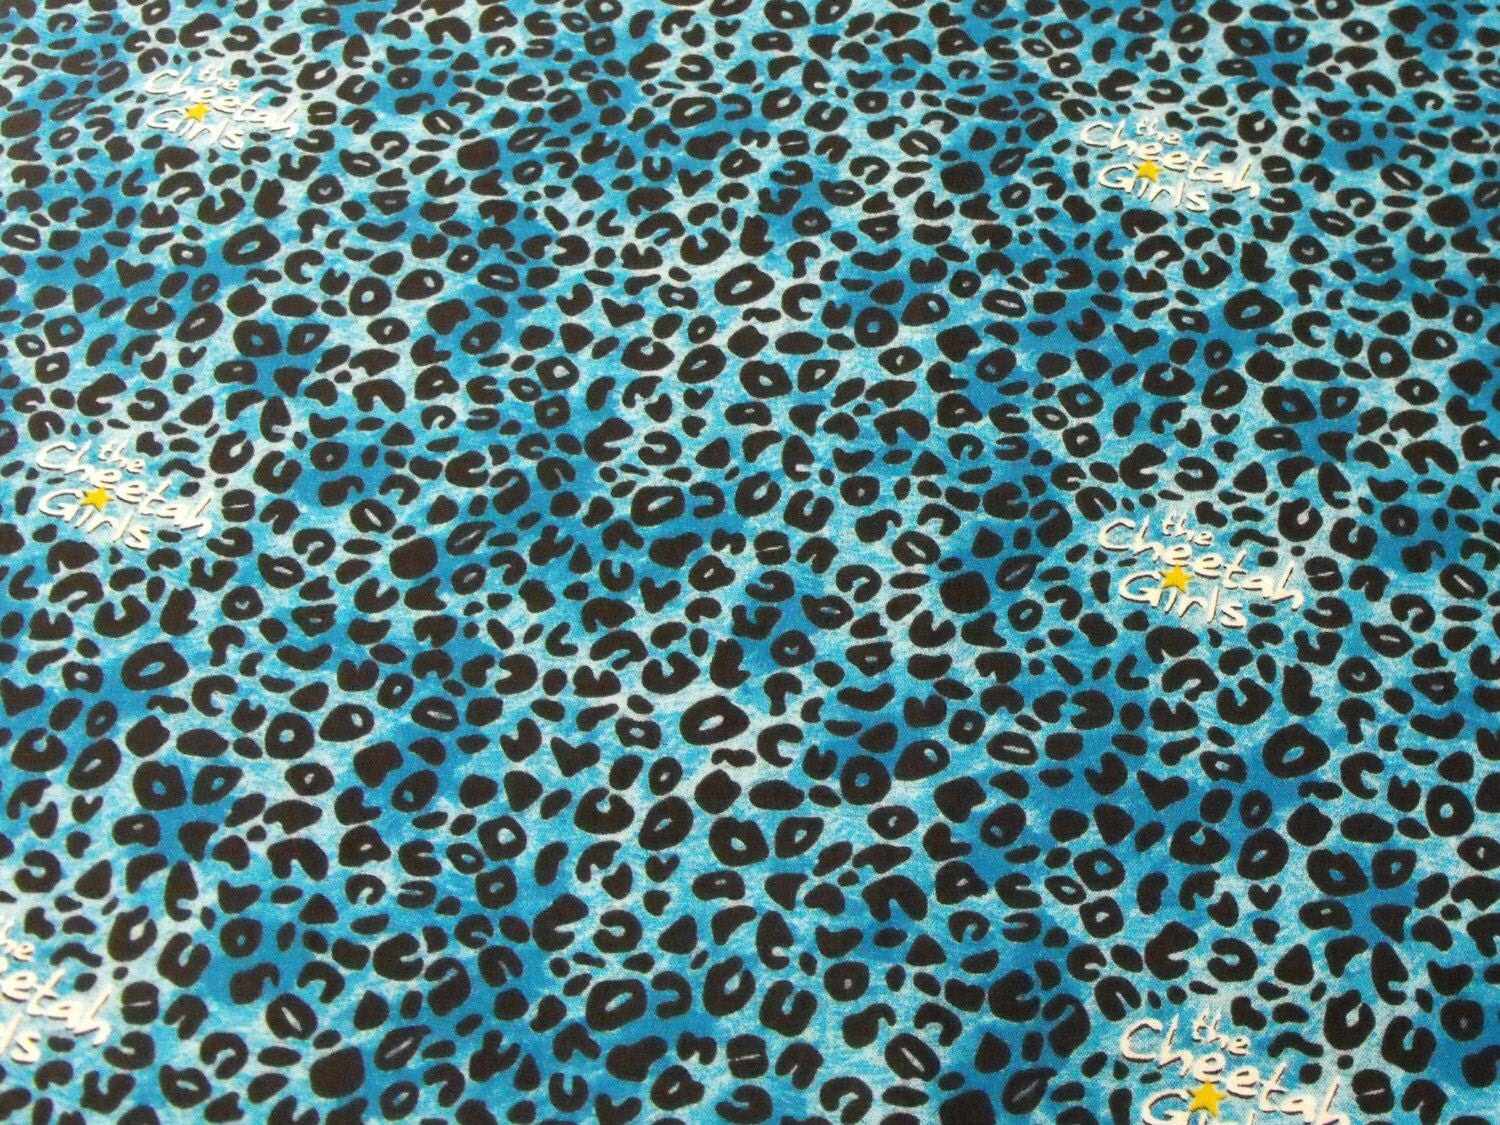 cheetah print pictures